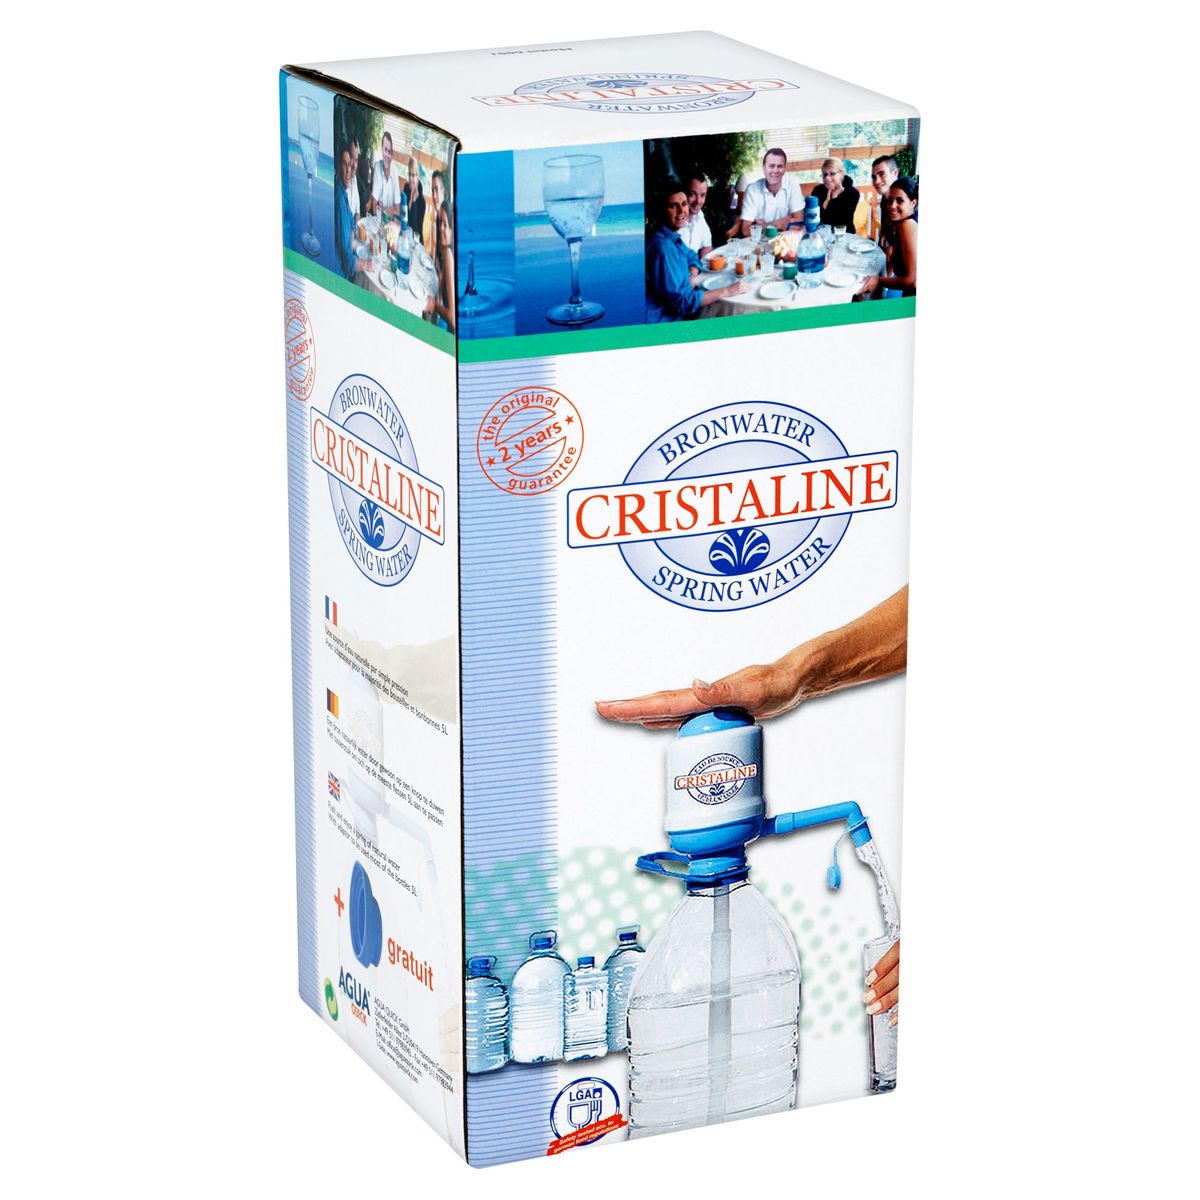 Cristaline Spring Water